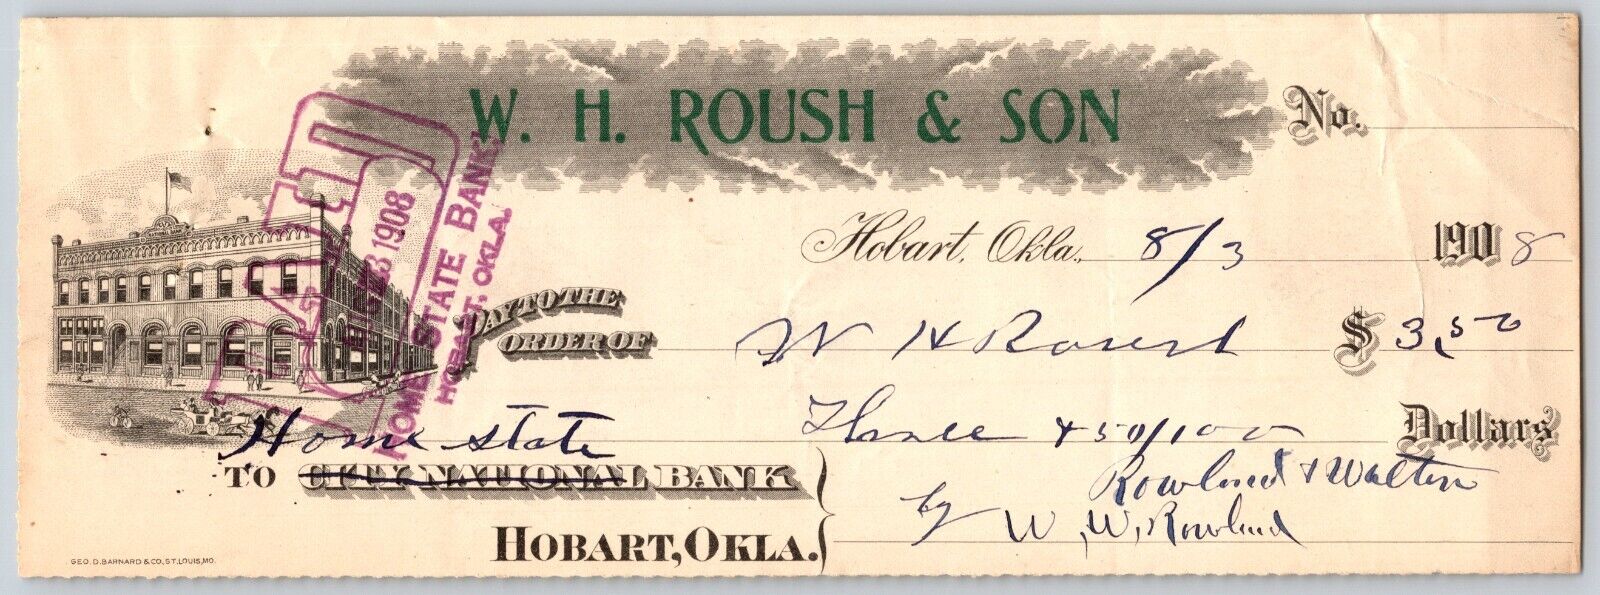 Hobart Oklahoma 1908 W.H. Rouch & Son Bank Check - Scarce